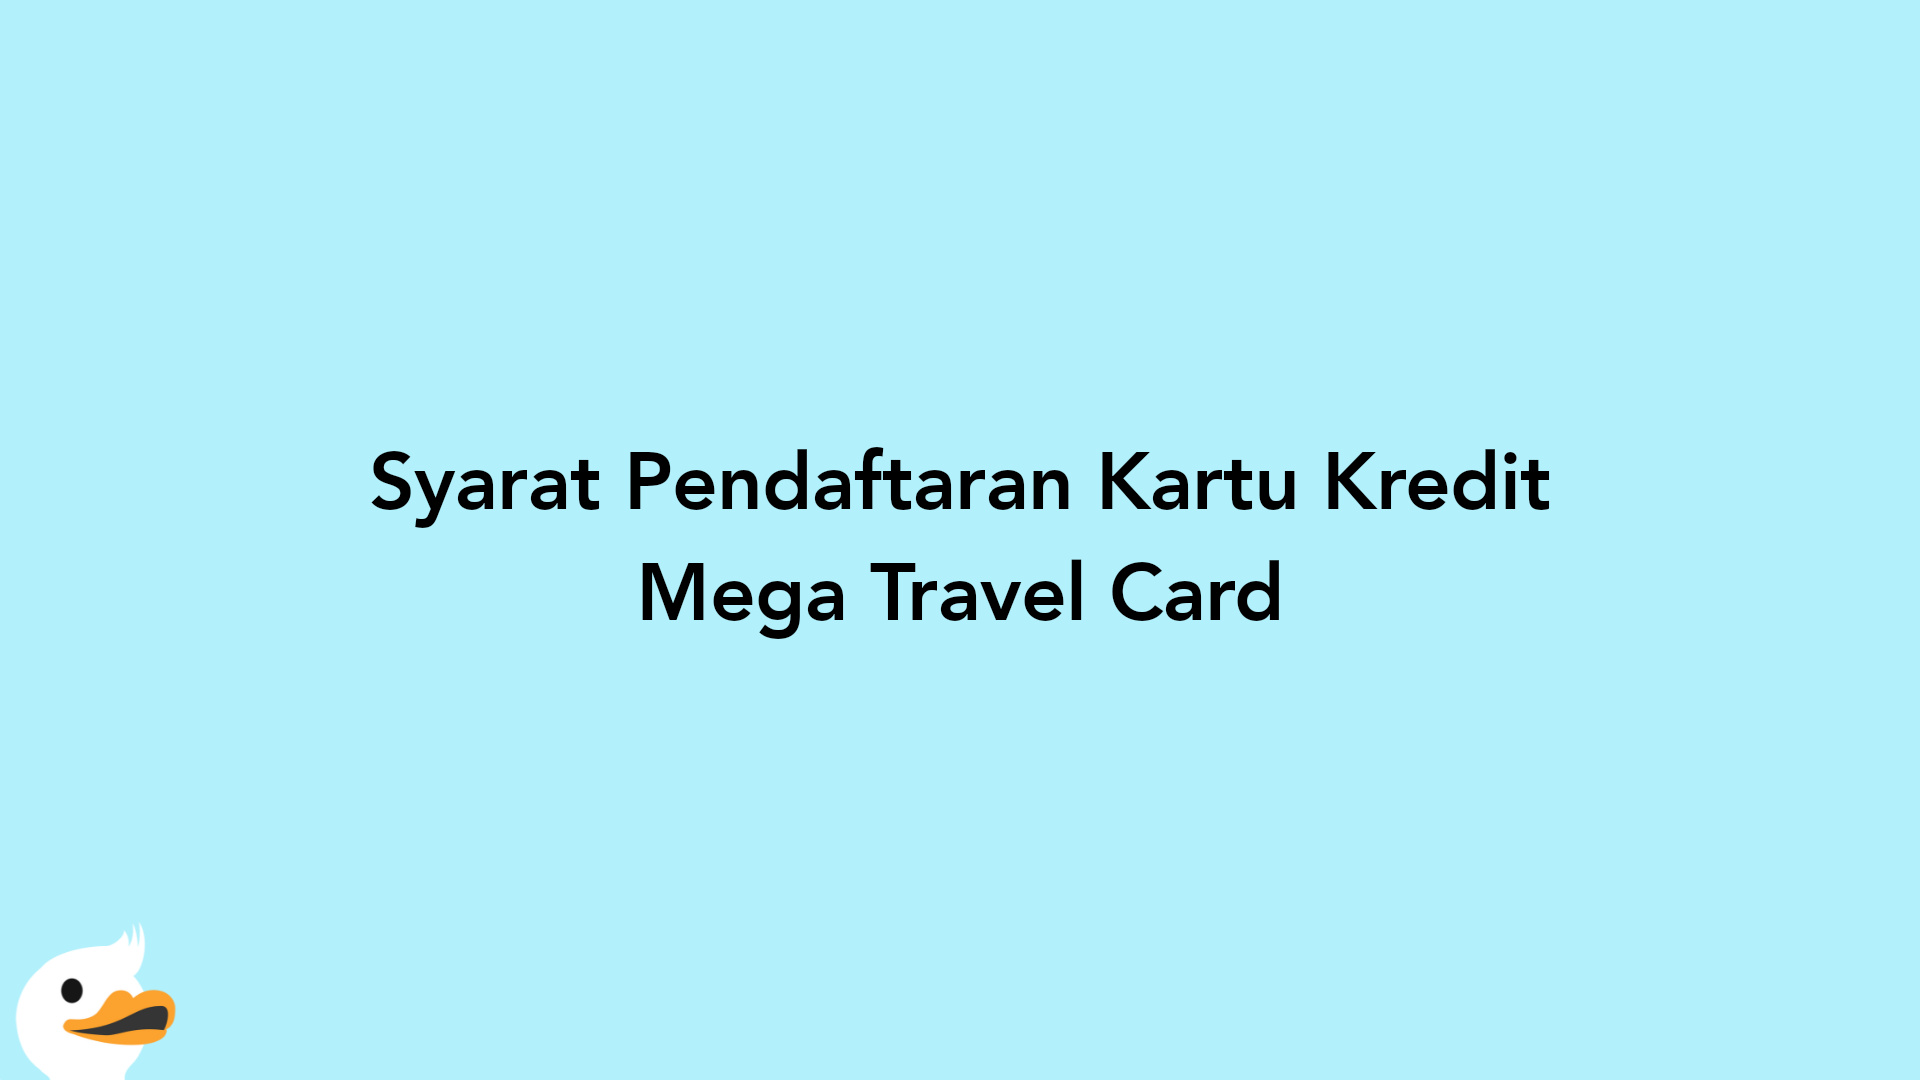 Syarat Pendaftaran Kartu Kredit Mega Travel Card